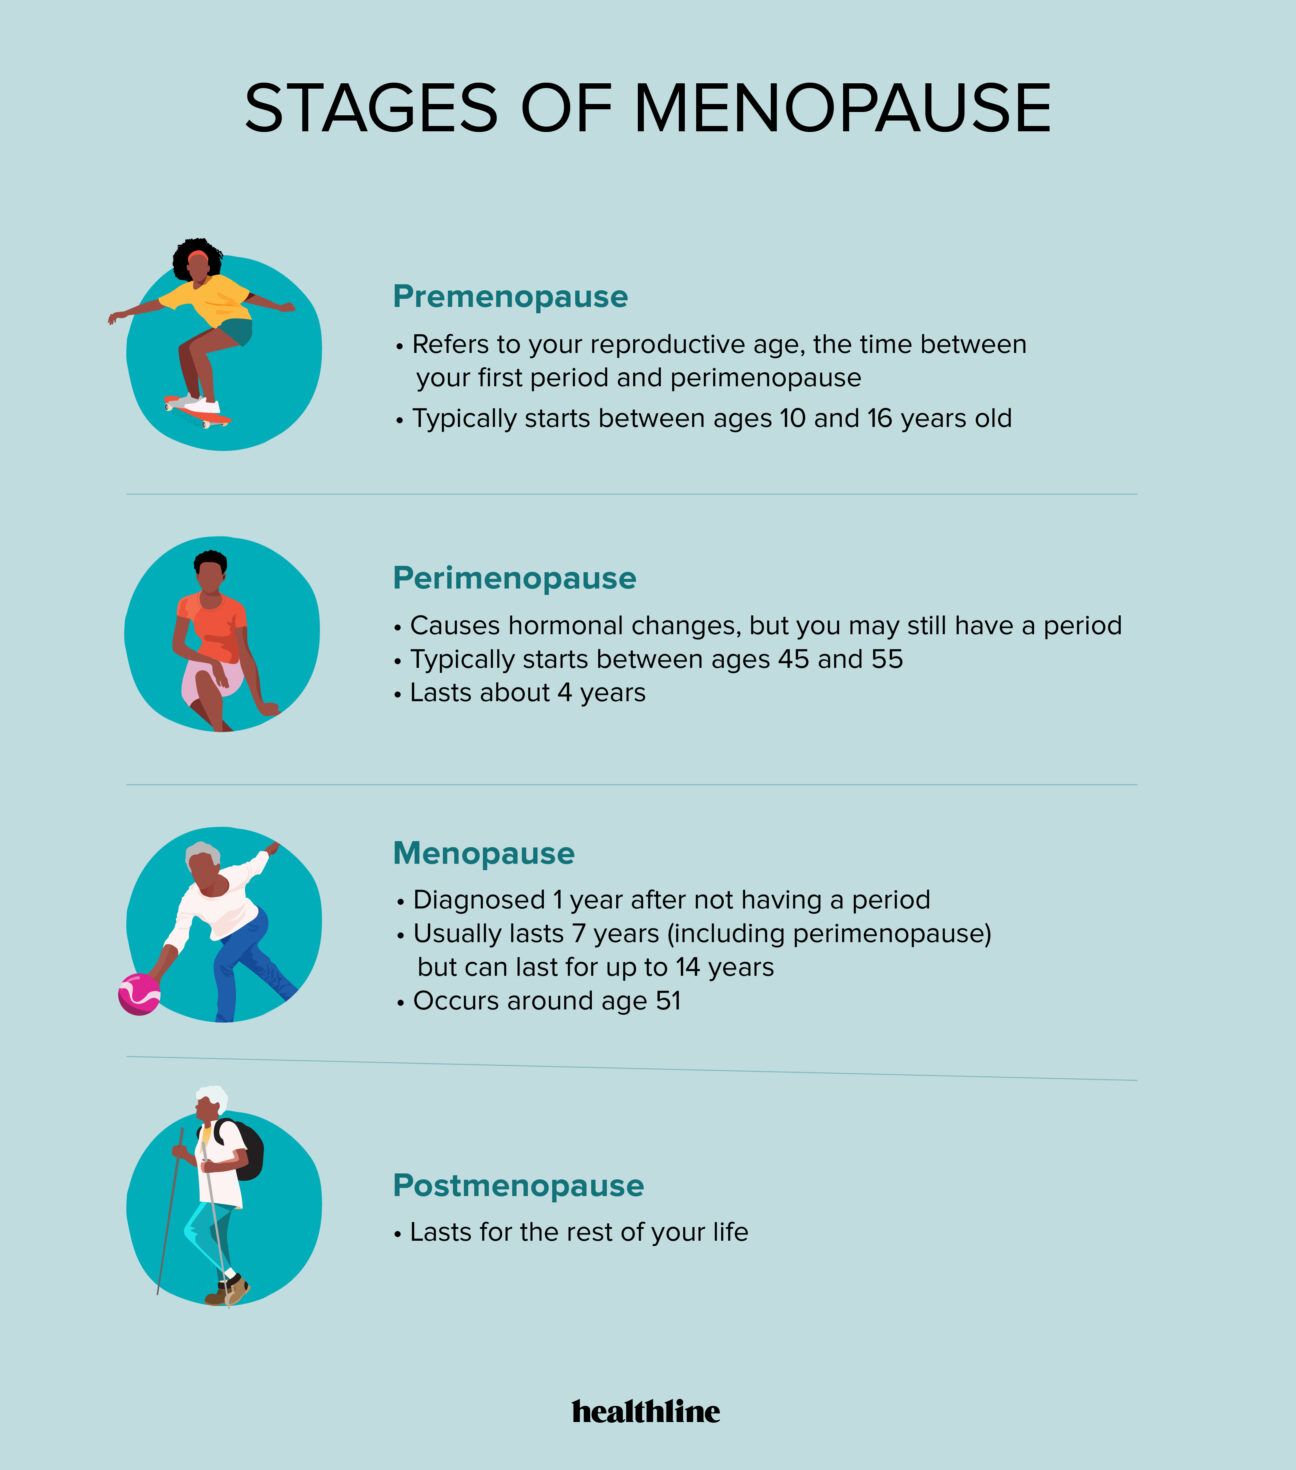  One Step Female Fertility Test Midstream, 2 Test Pack, Peri  Menopausal, Menopause Testing Kit, Home Urine FSH Test : Health & Household